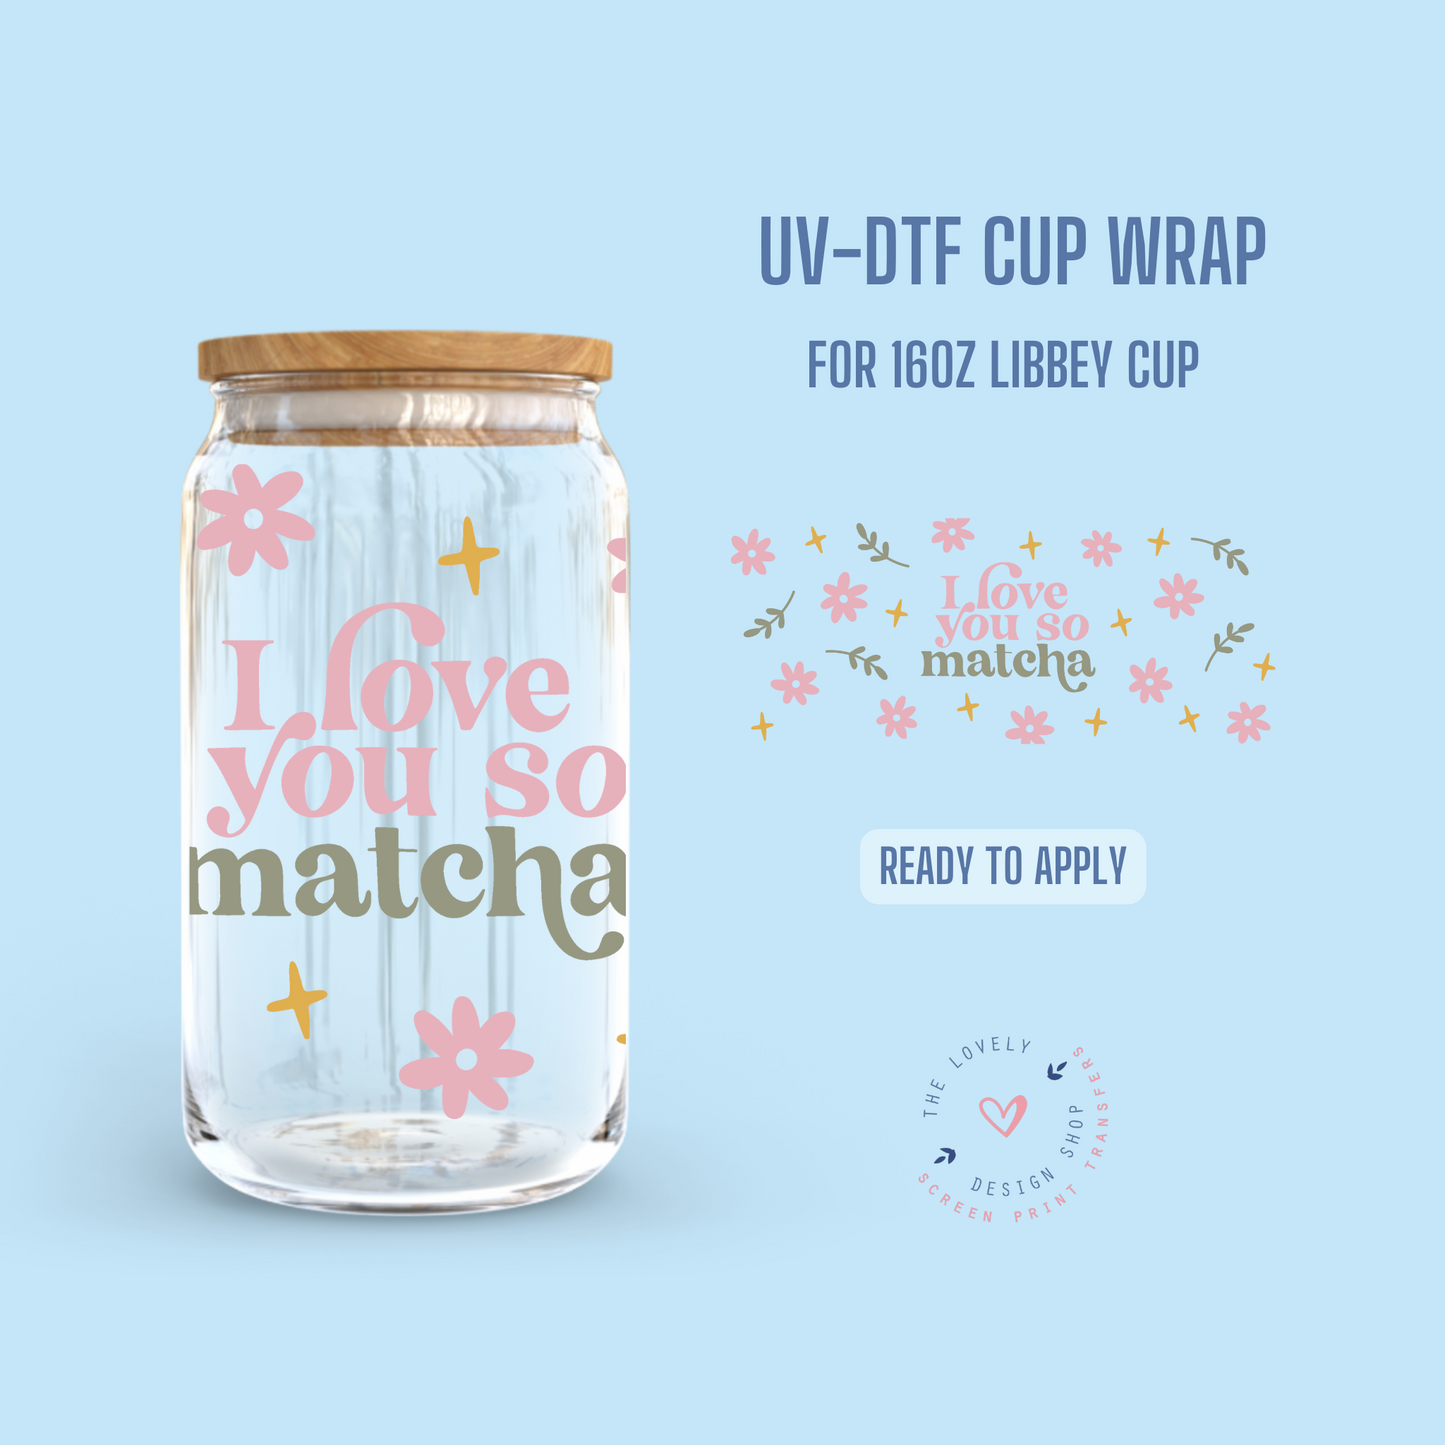 I Love You So Matcha - UV DTF 16 oz Libbey Cup Wrap (Ready to Ship)